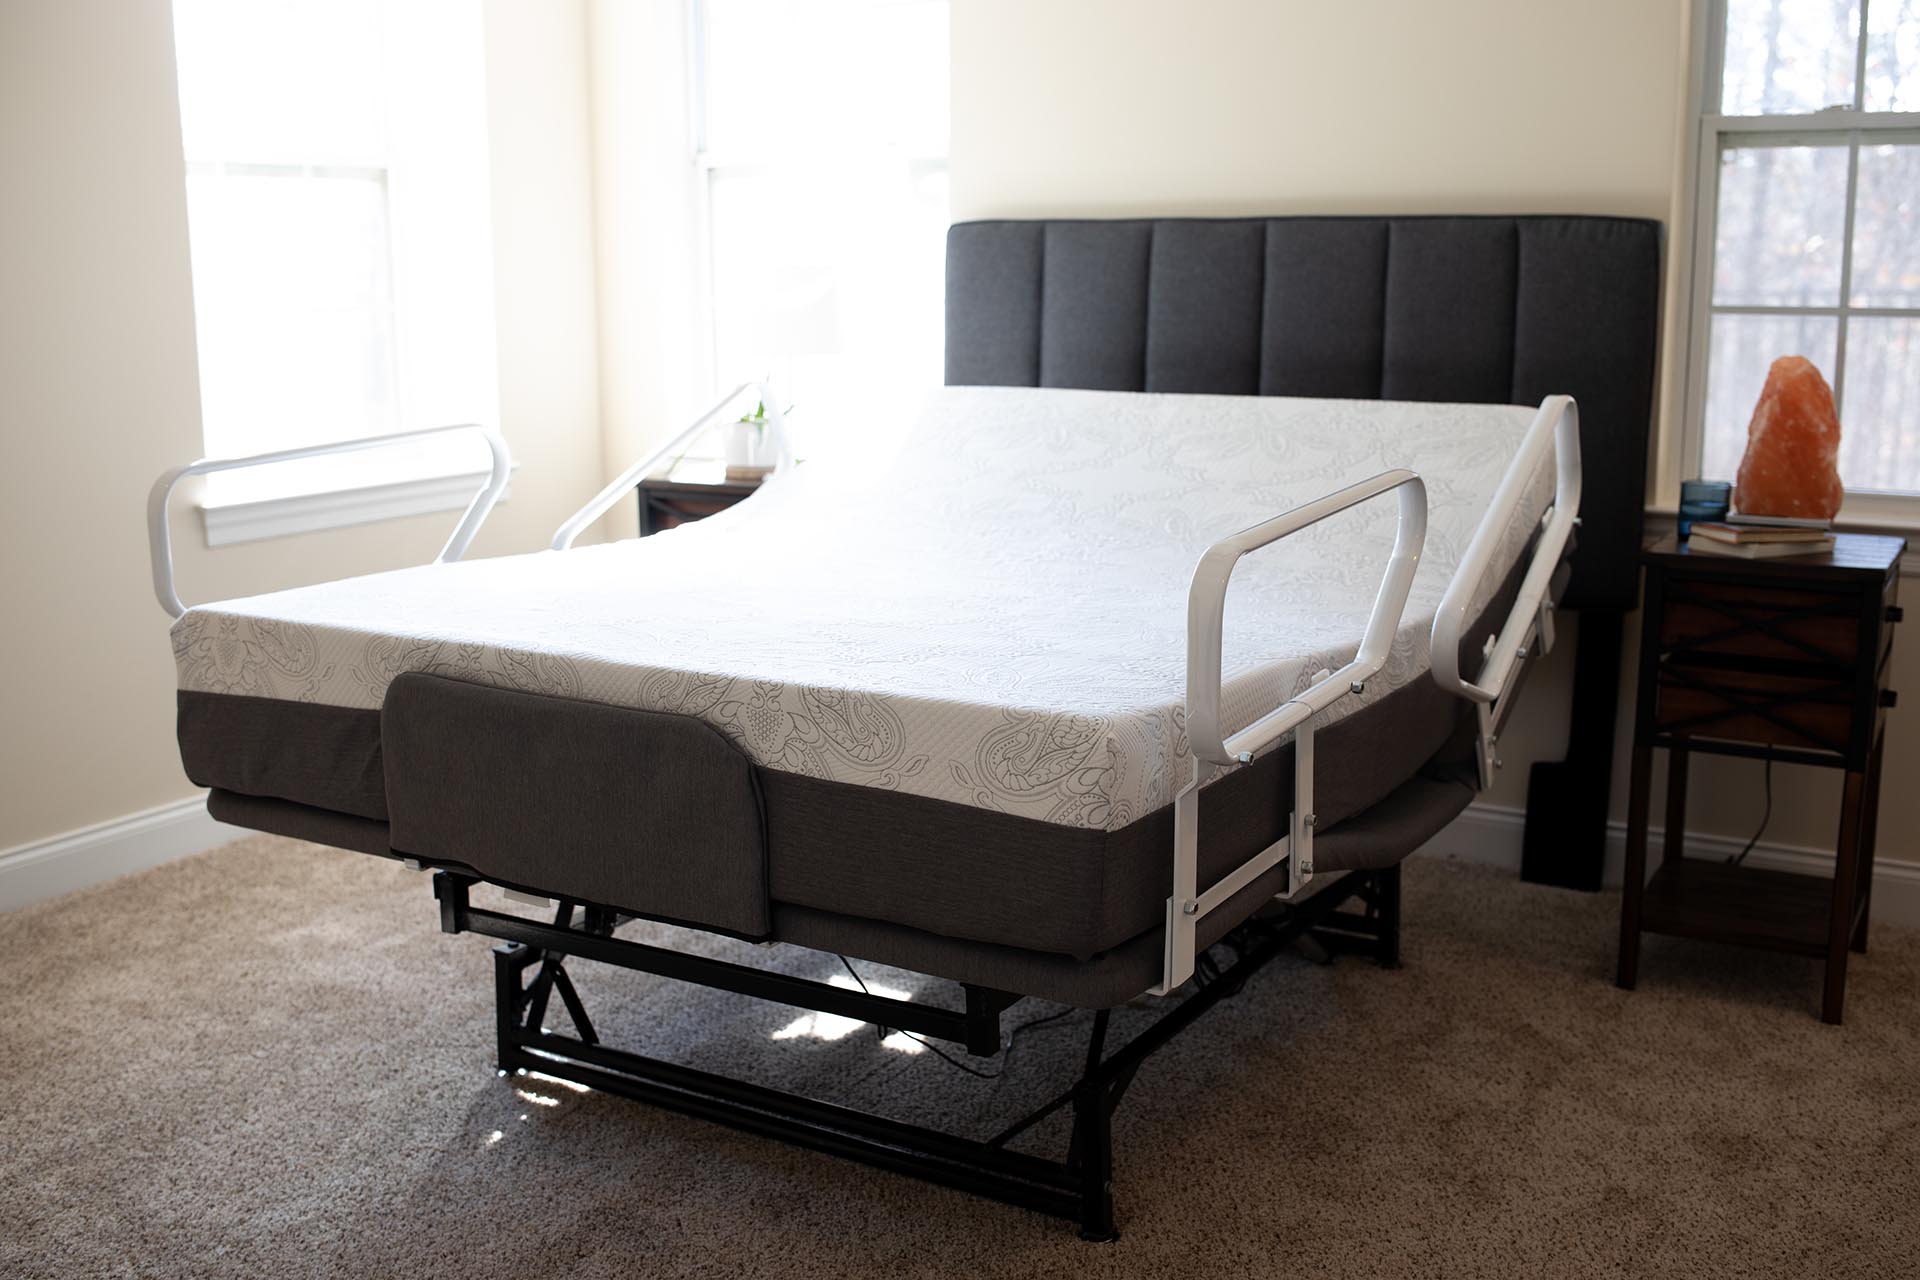 flex a bed low profile mattress